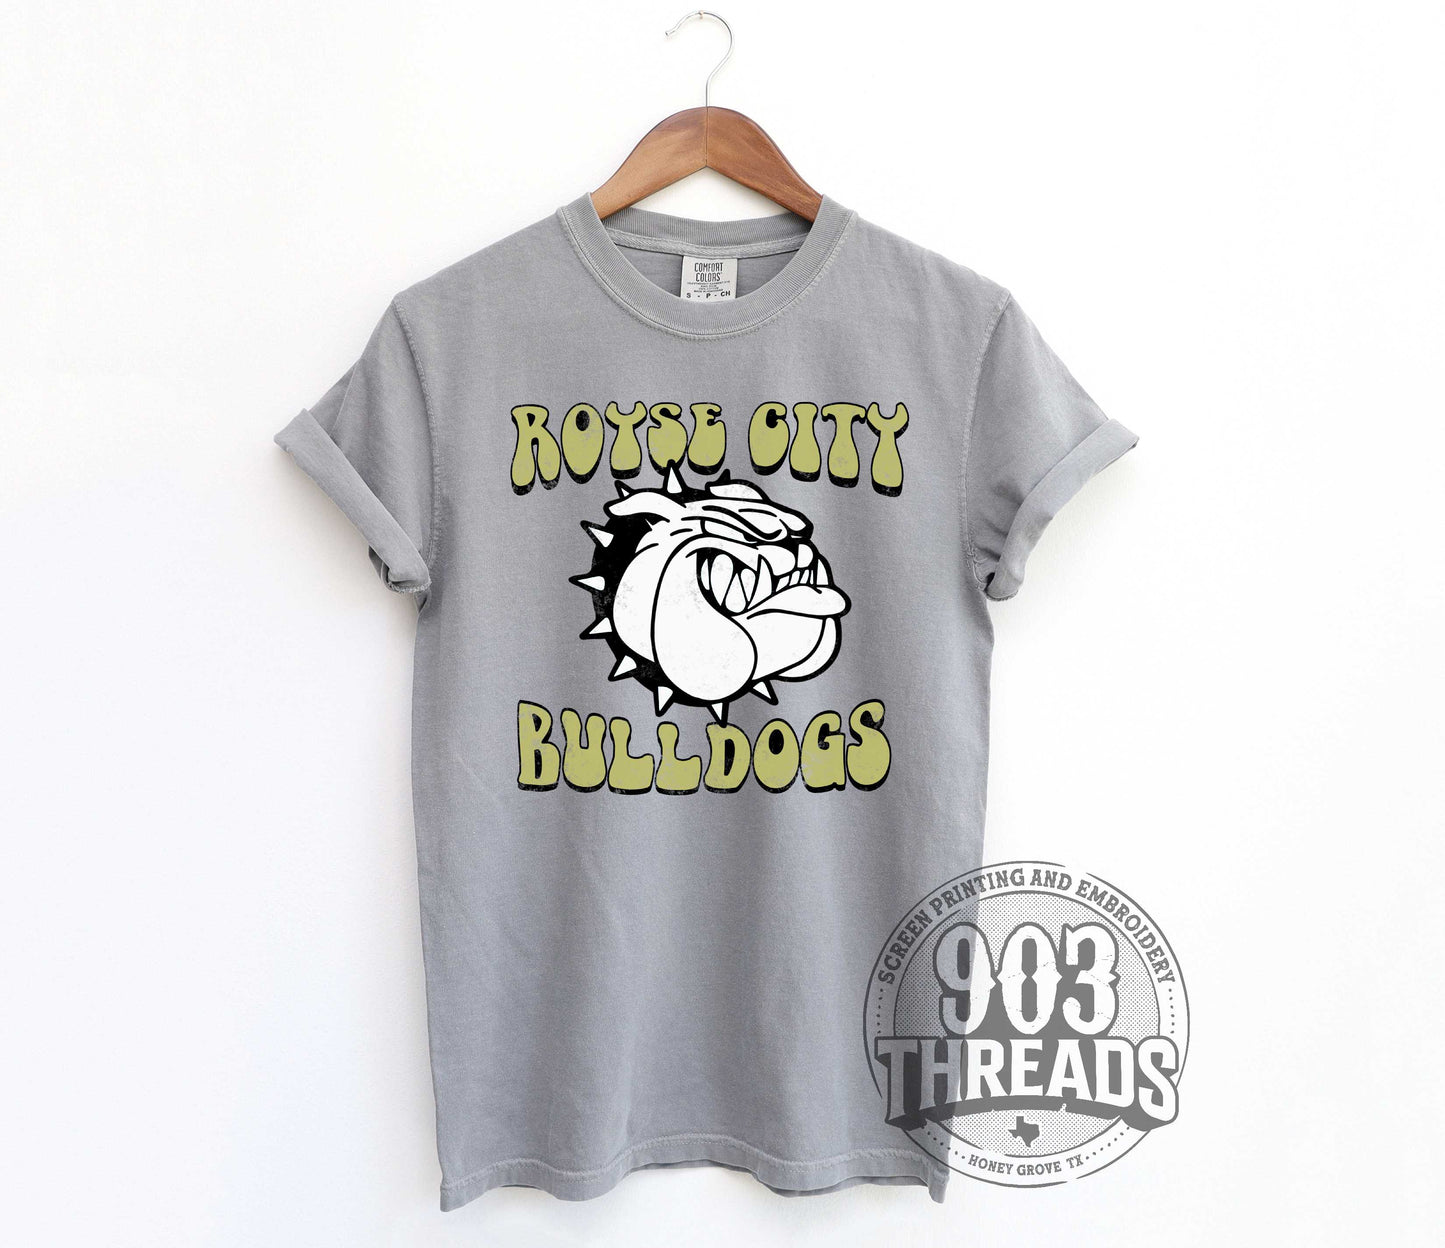 Royse City Bulldogs - Old School Mascot